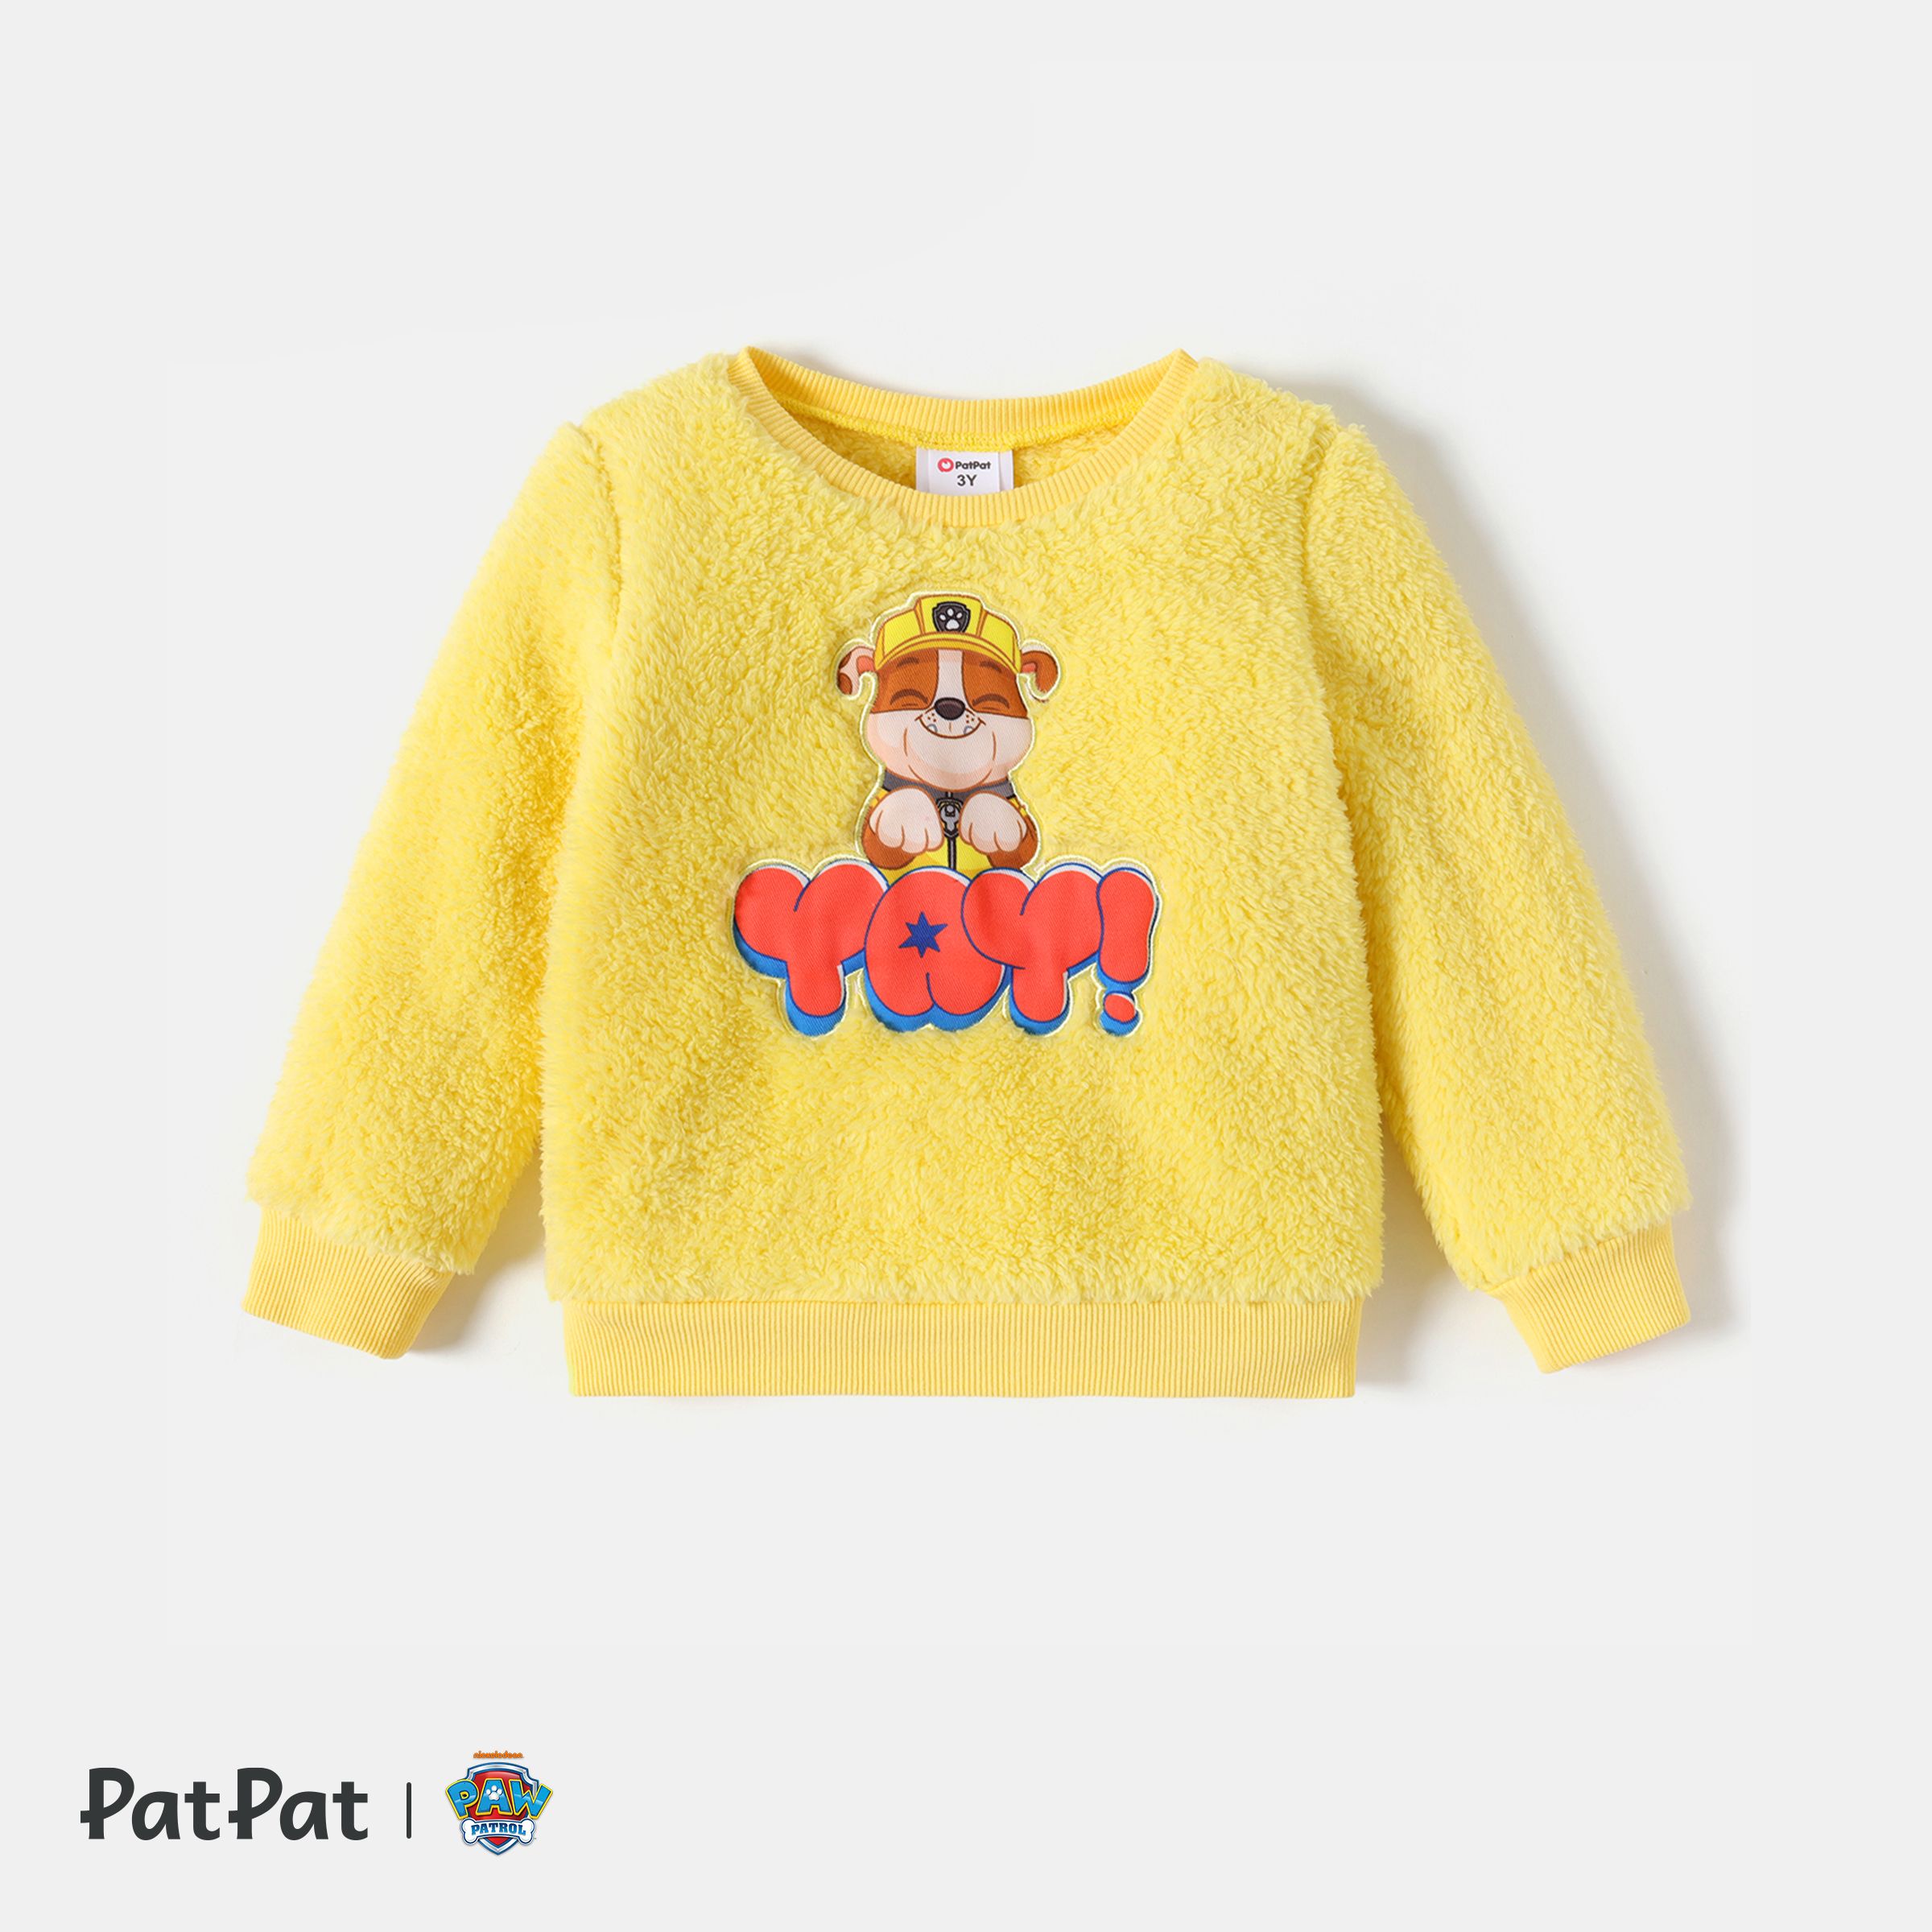 PAW Patrol Toddler Girl/Boy Embroidered Fleece Cotton Sweatshirt